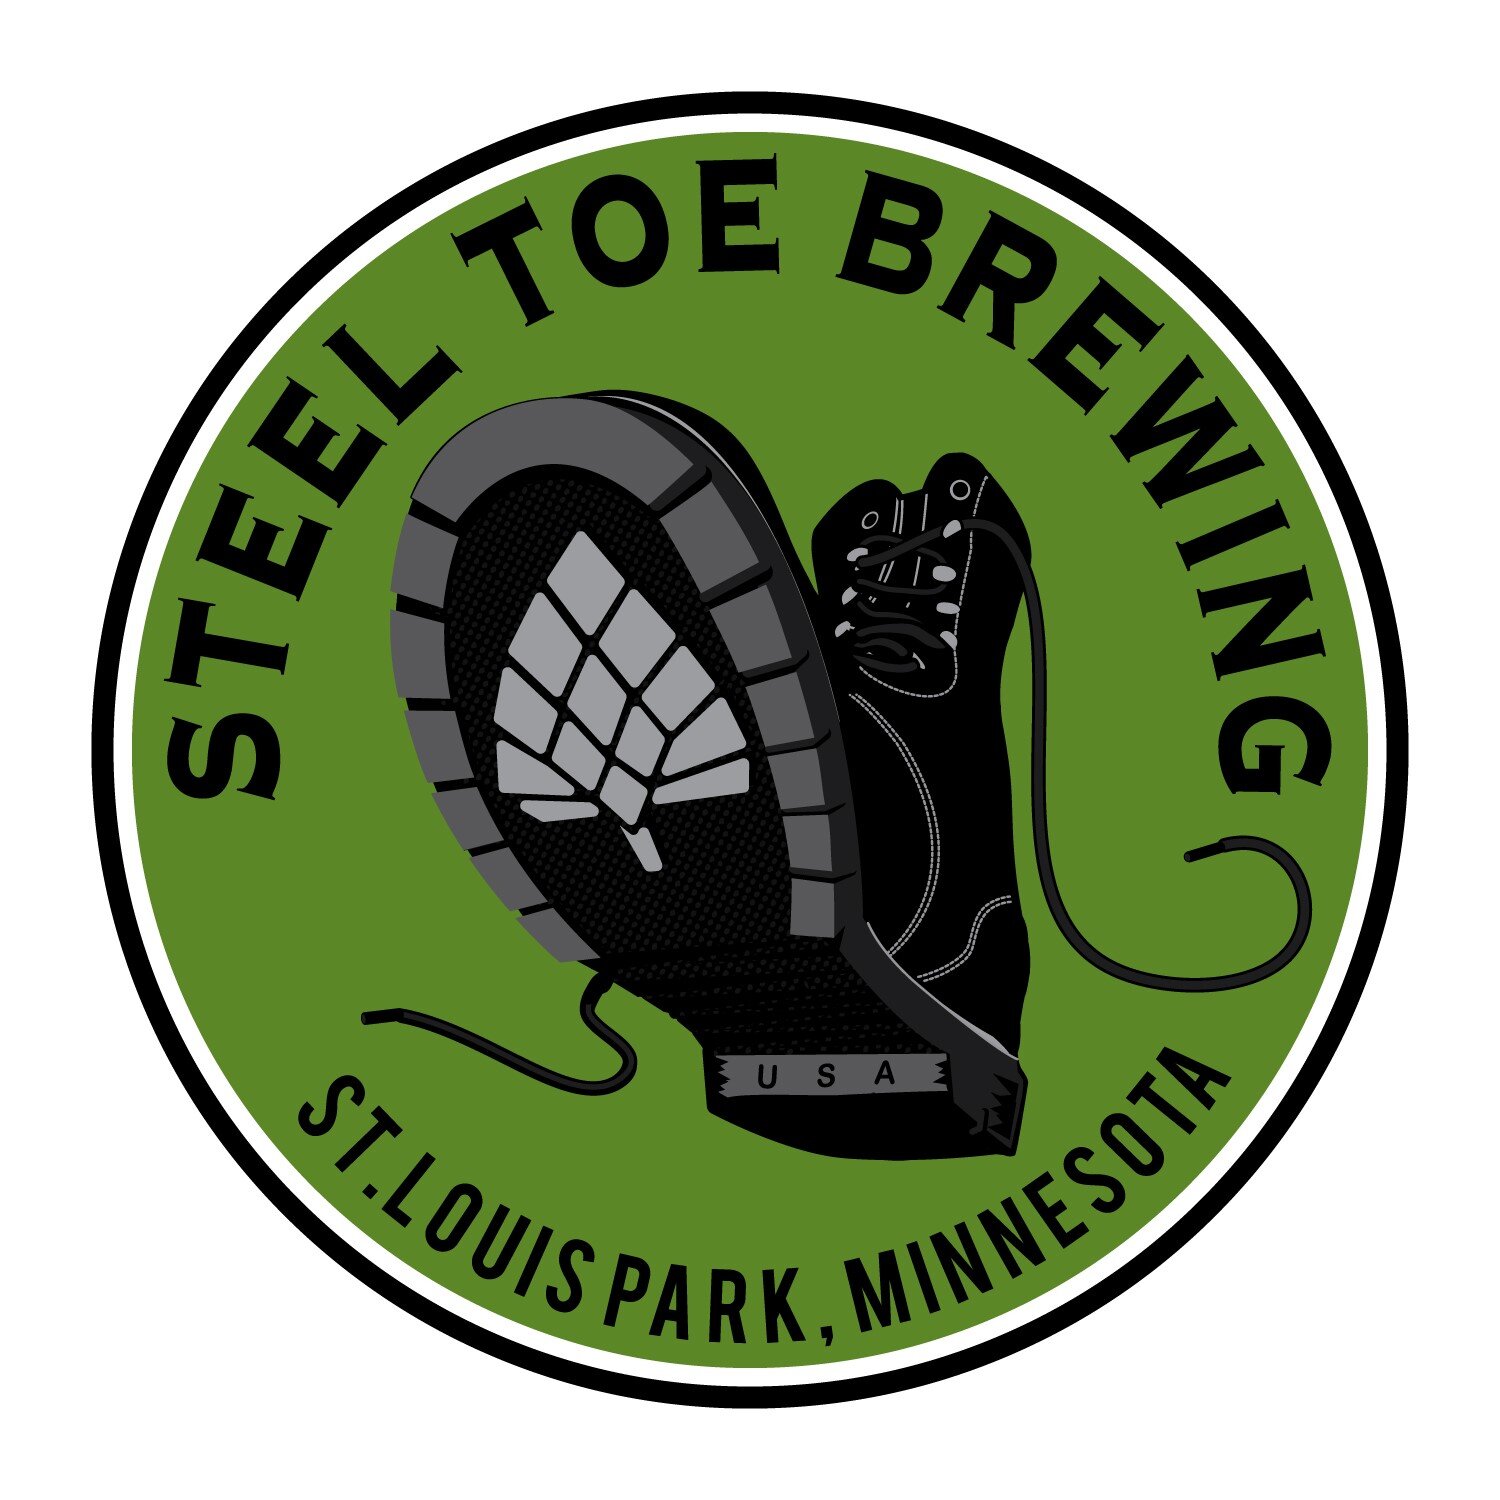 Steel Toe Brewing Beer Coaster-St Louis Park Minn Minneapolis-Near Hopkins MN 